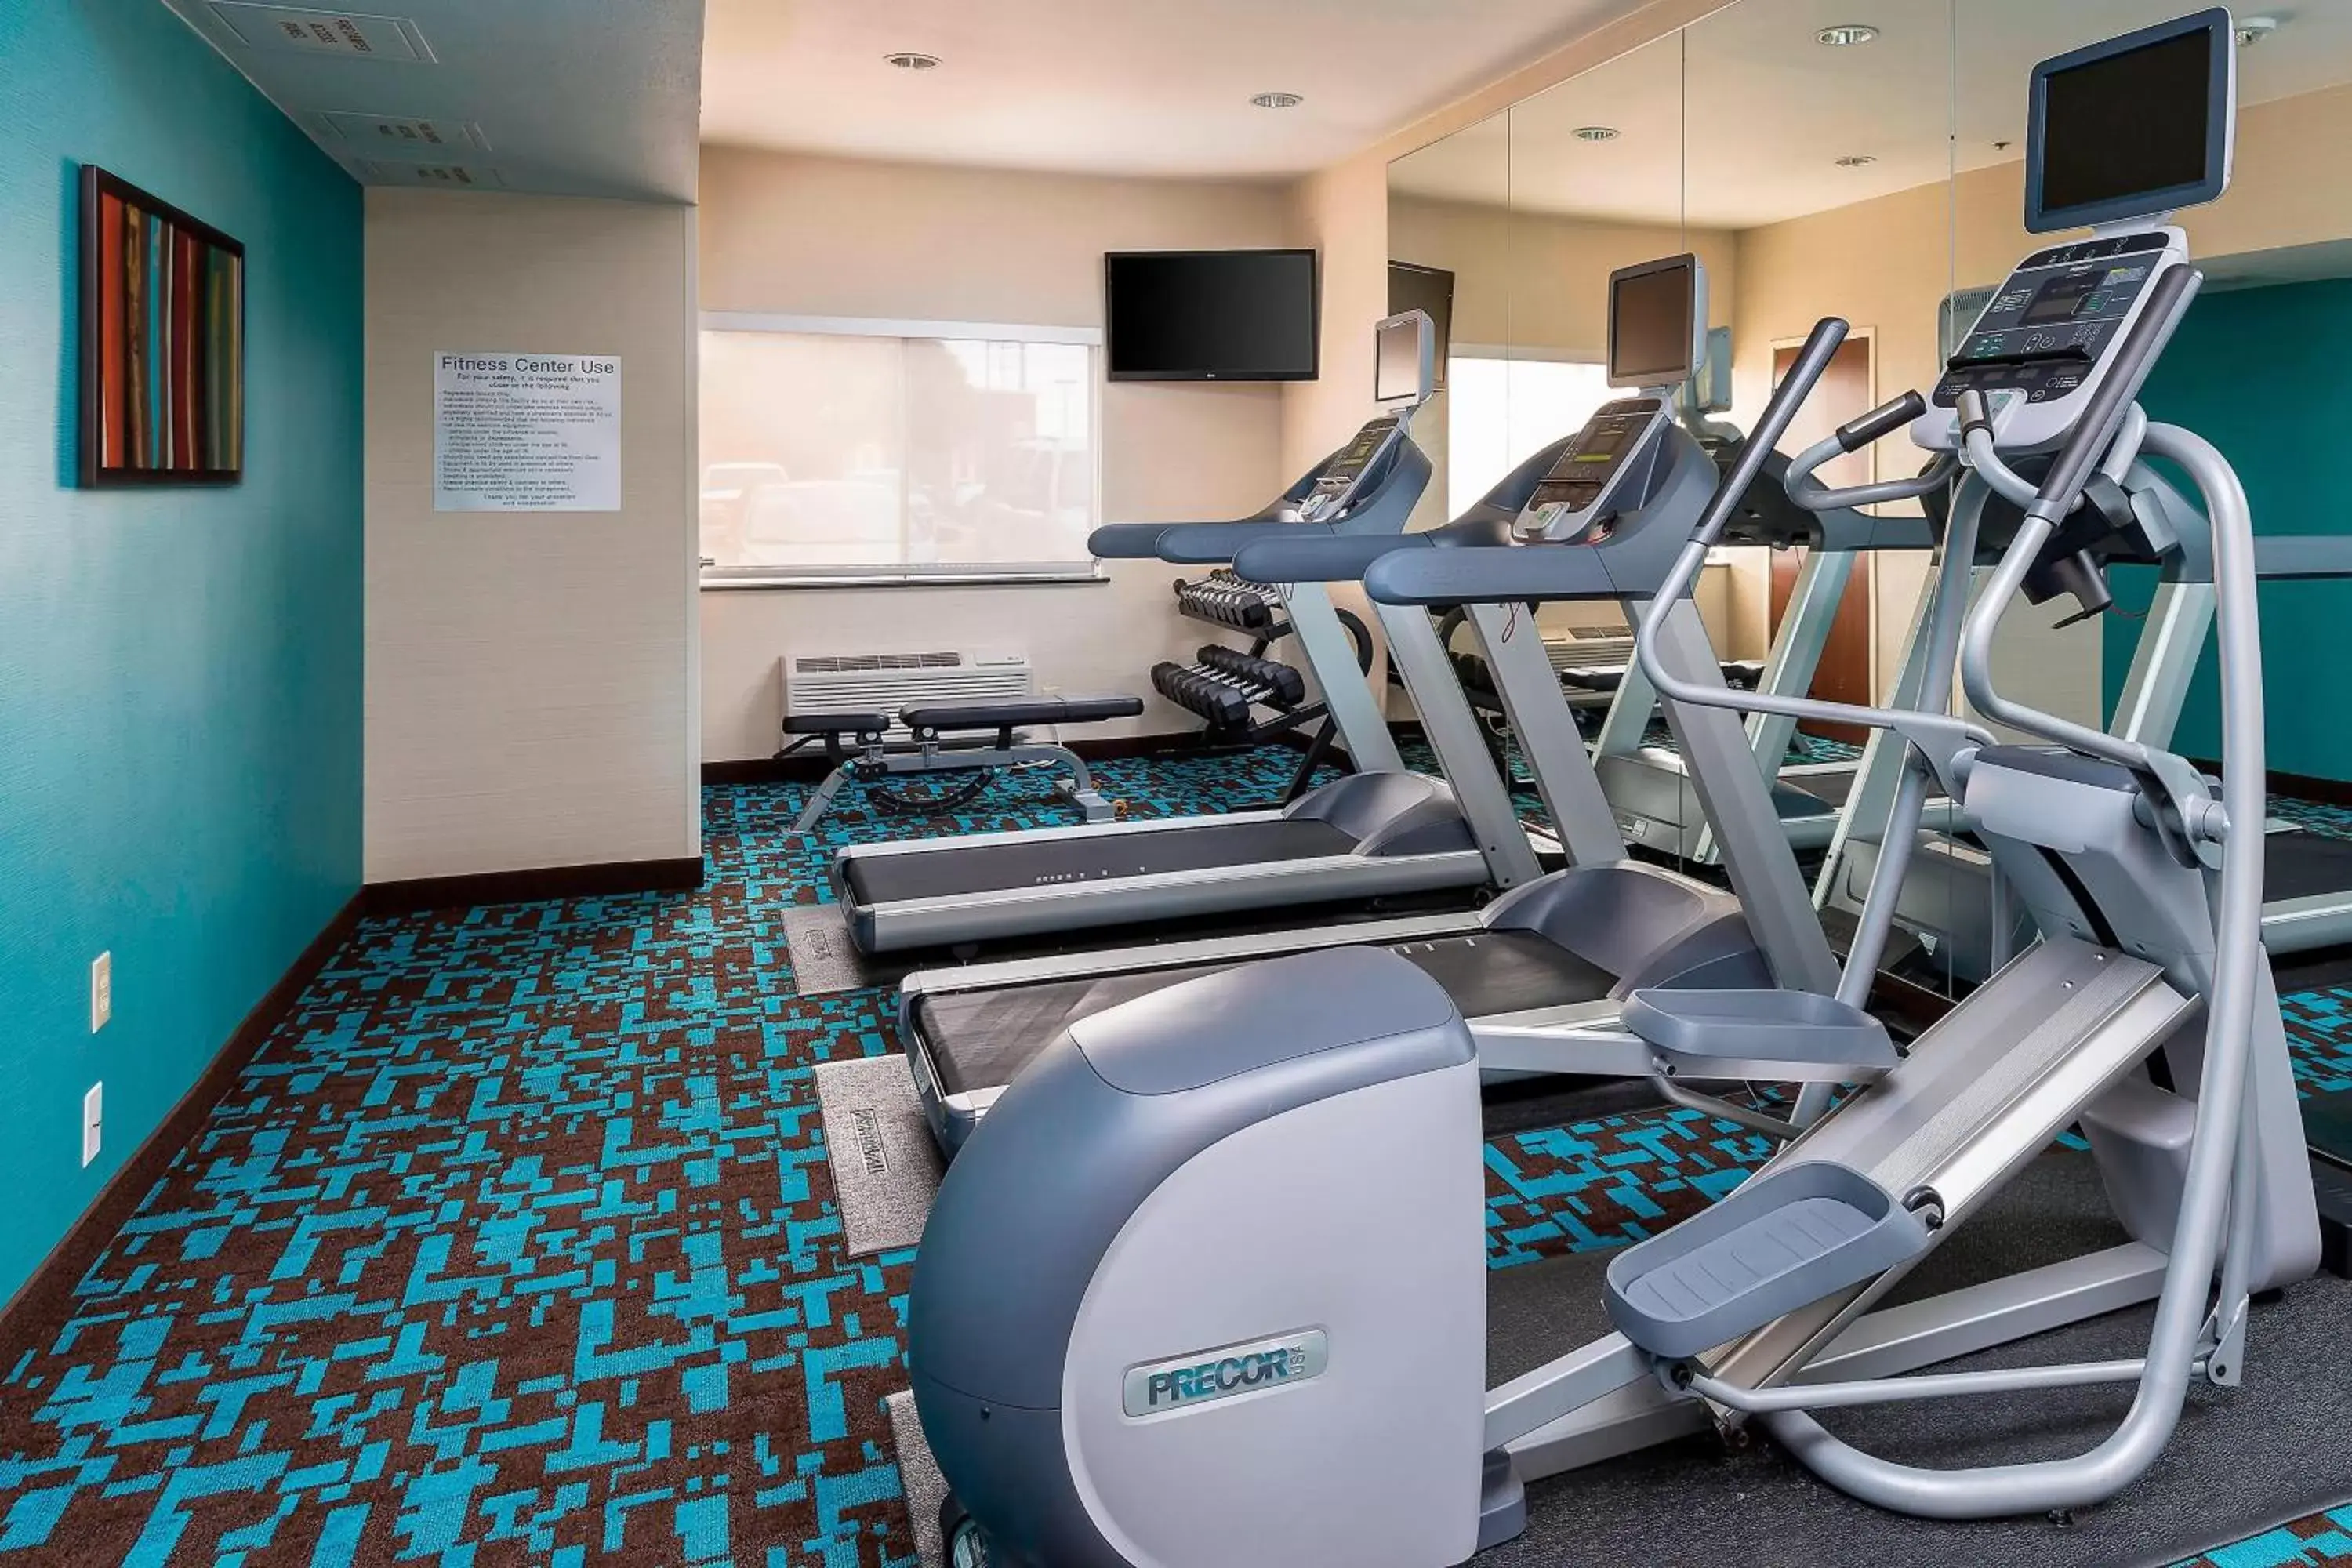 Fitness centre/facilities, Fitness Center/Facilities in Fairfield Inn & Suites Lubbock